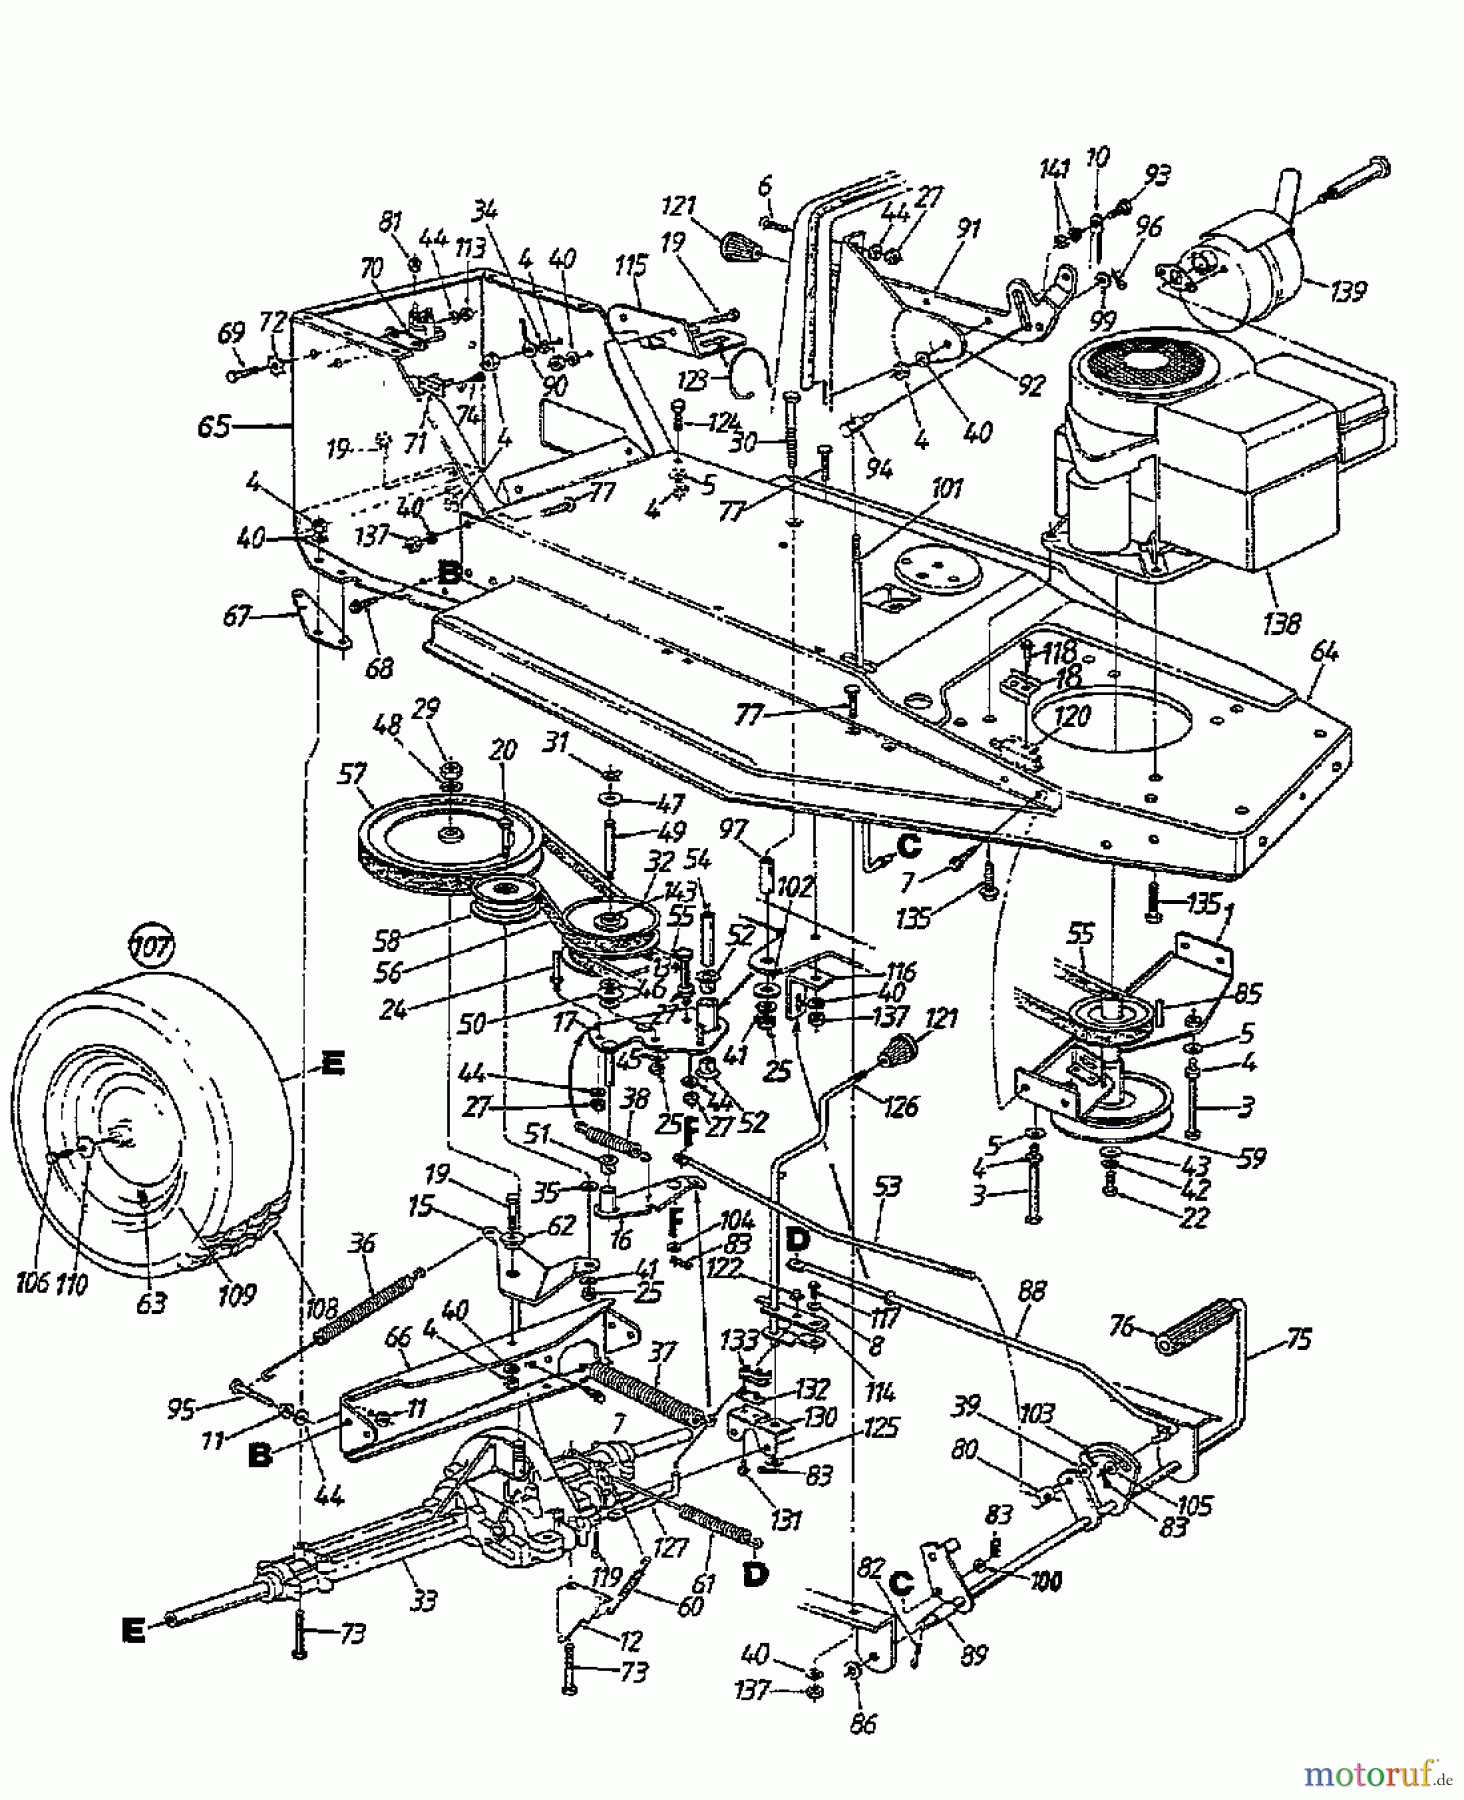  Bauhaus Lawn tractors Yard-Man 10/76 133B352D646  (1993) Drive system, Engine pulley, Pedal, Rear wheels